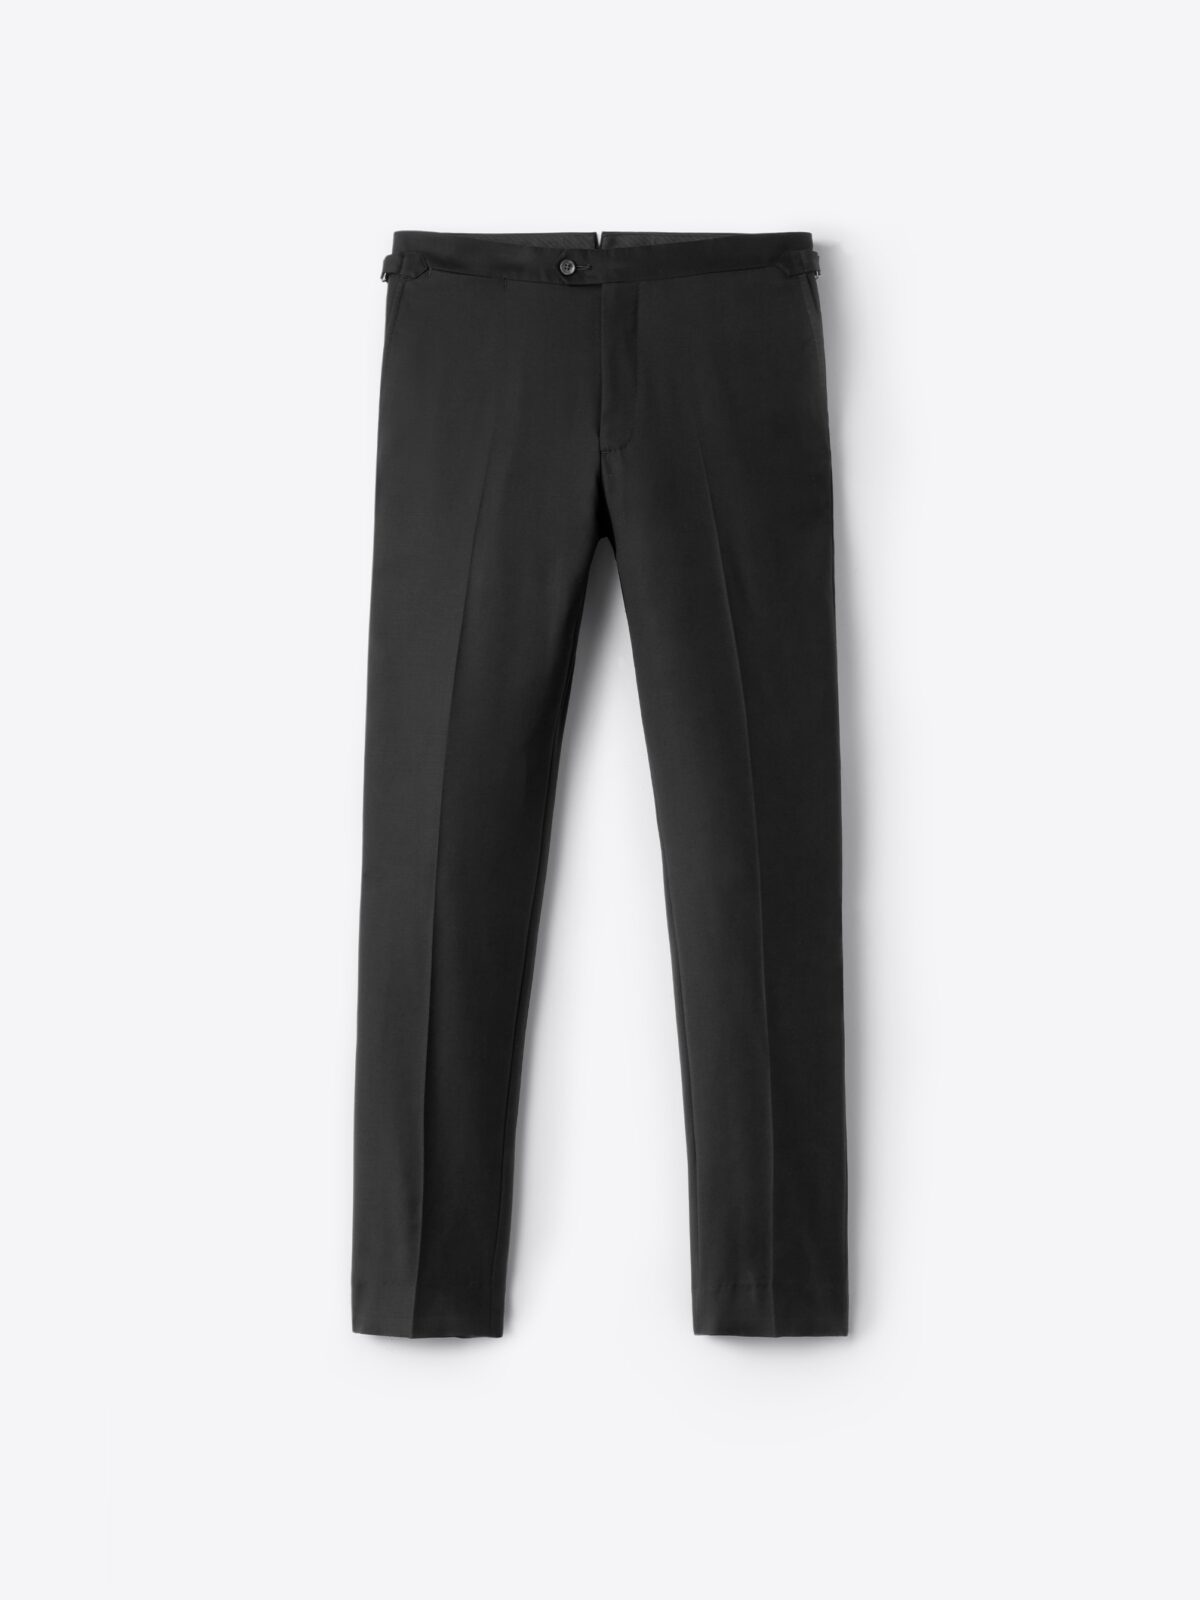 LADIES FASHION: Smart, classy ways to style your pants! - AlimoshoToday.com